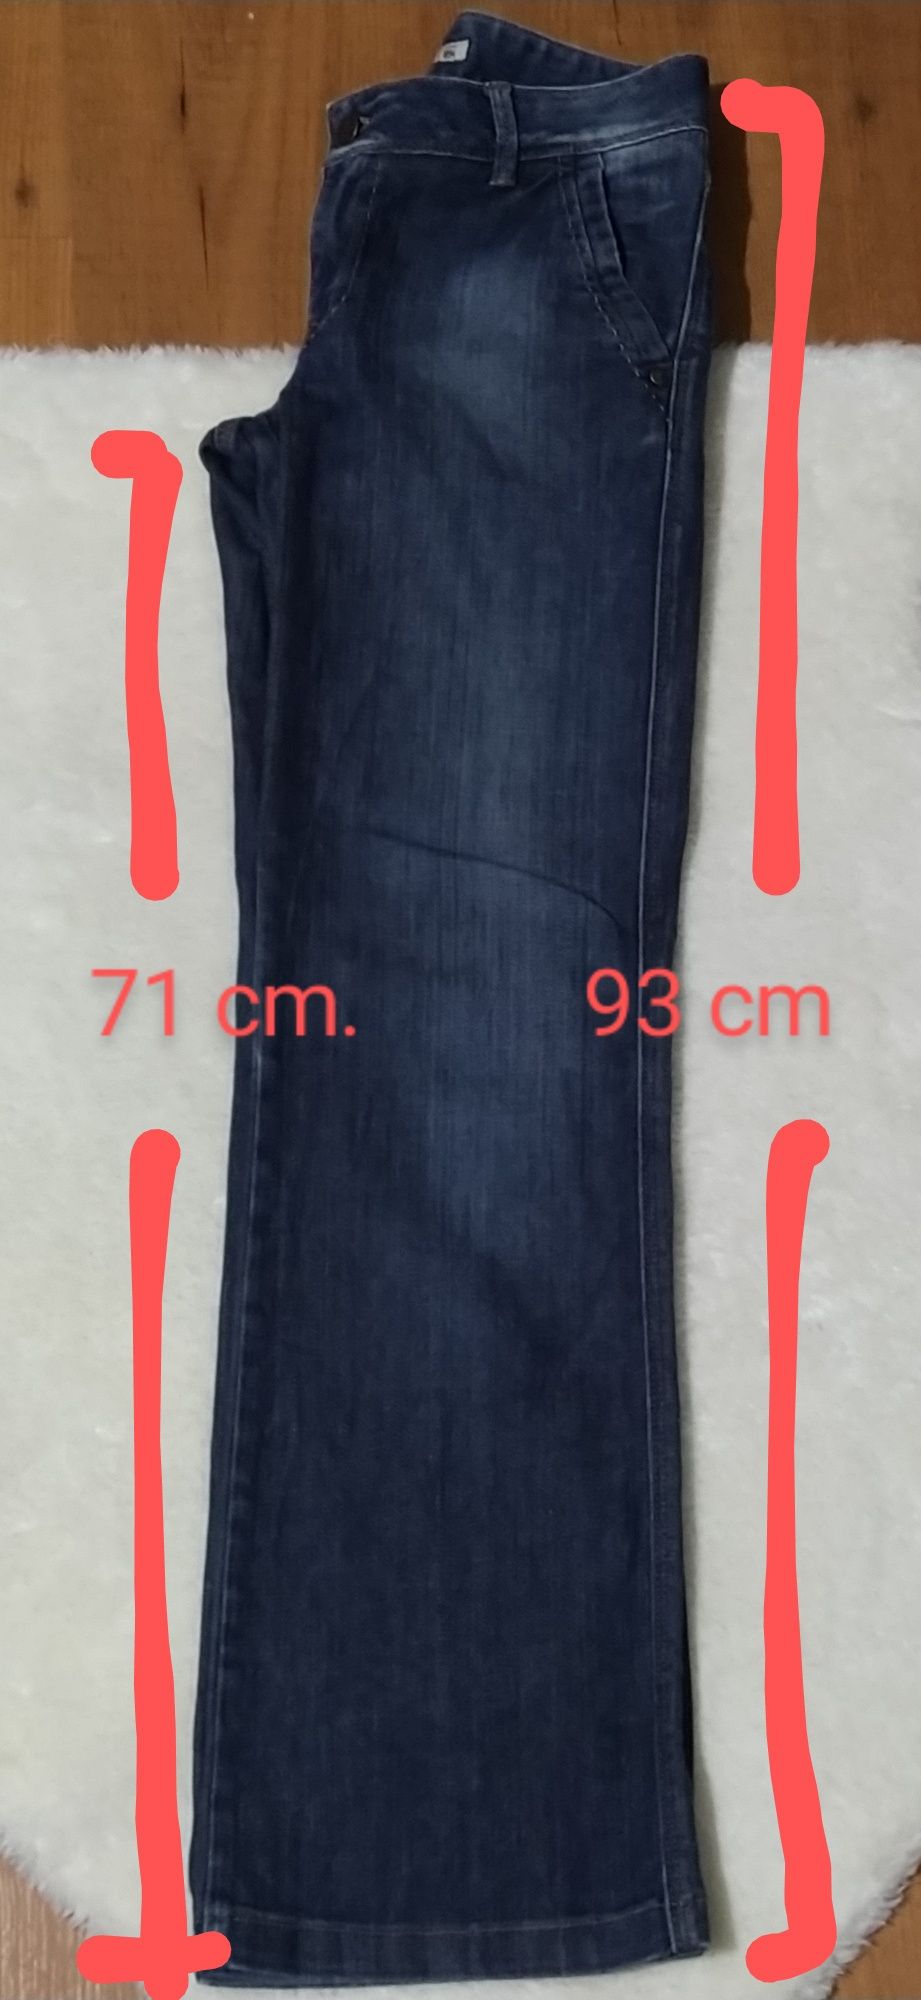 Calças jeans Salsa 34 cintura baixa regular fit